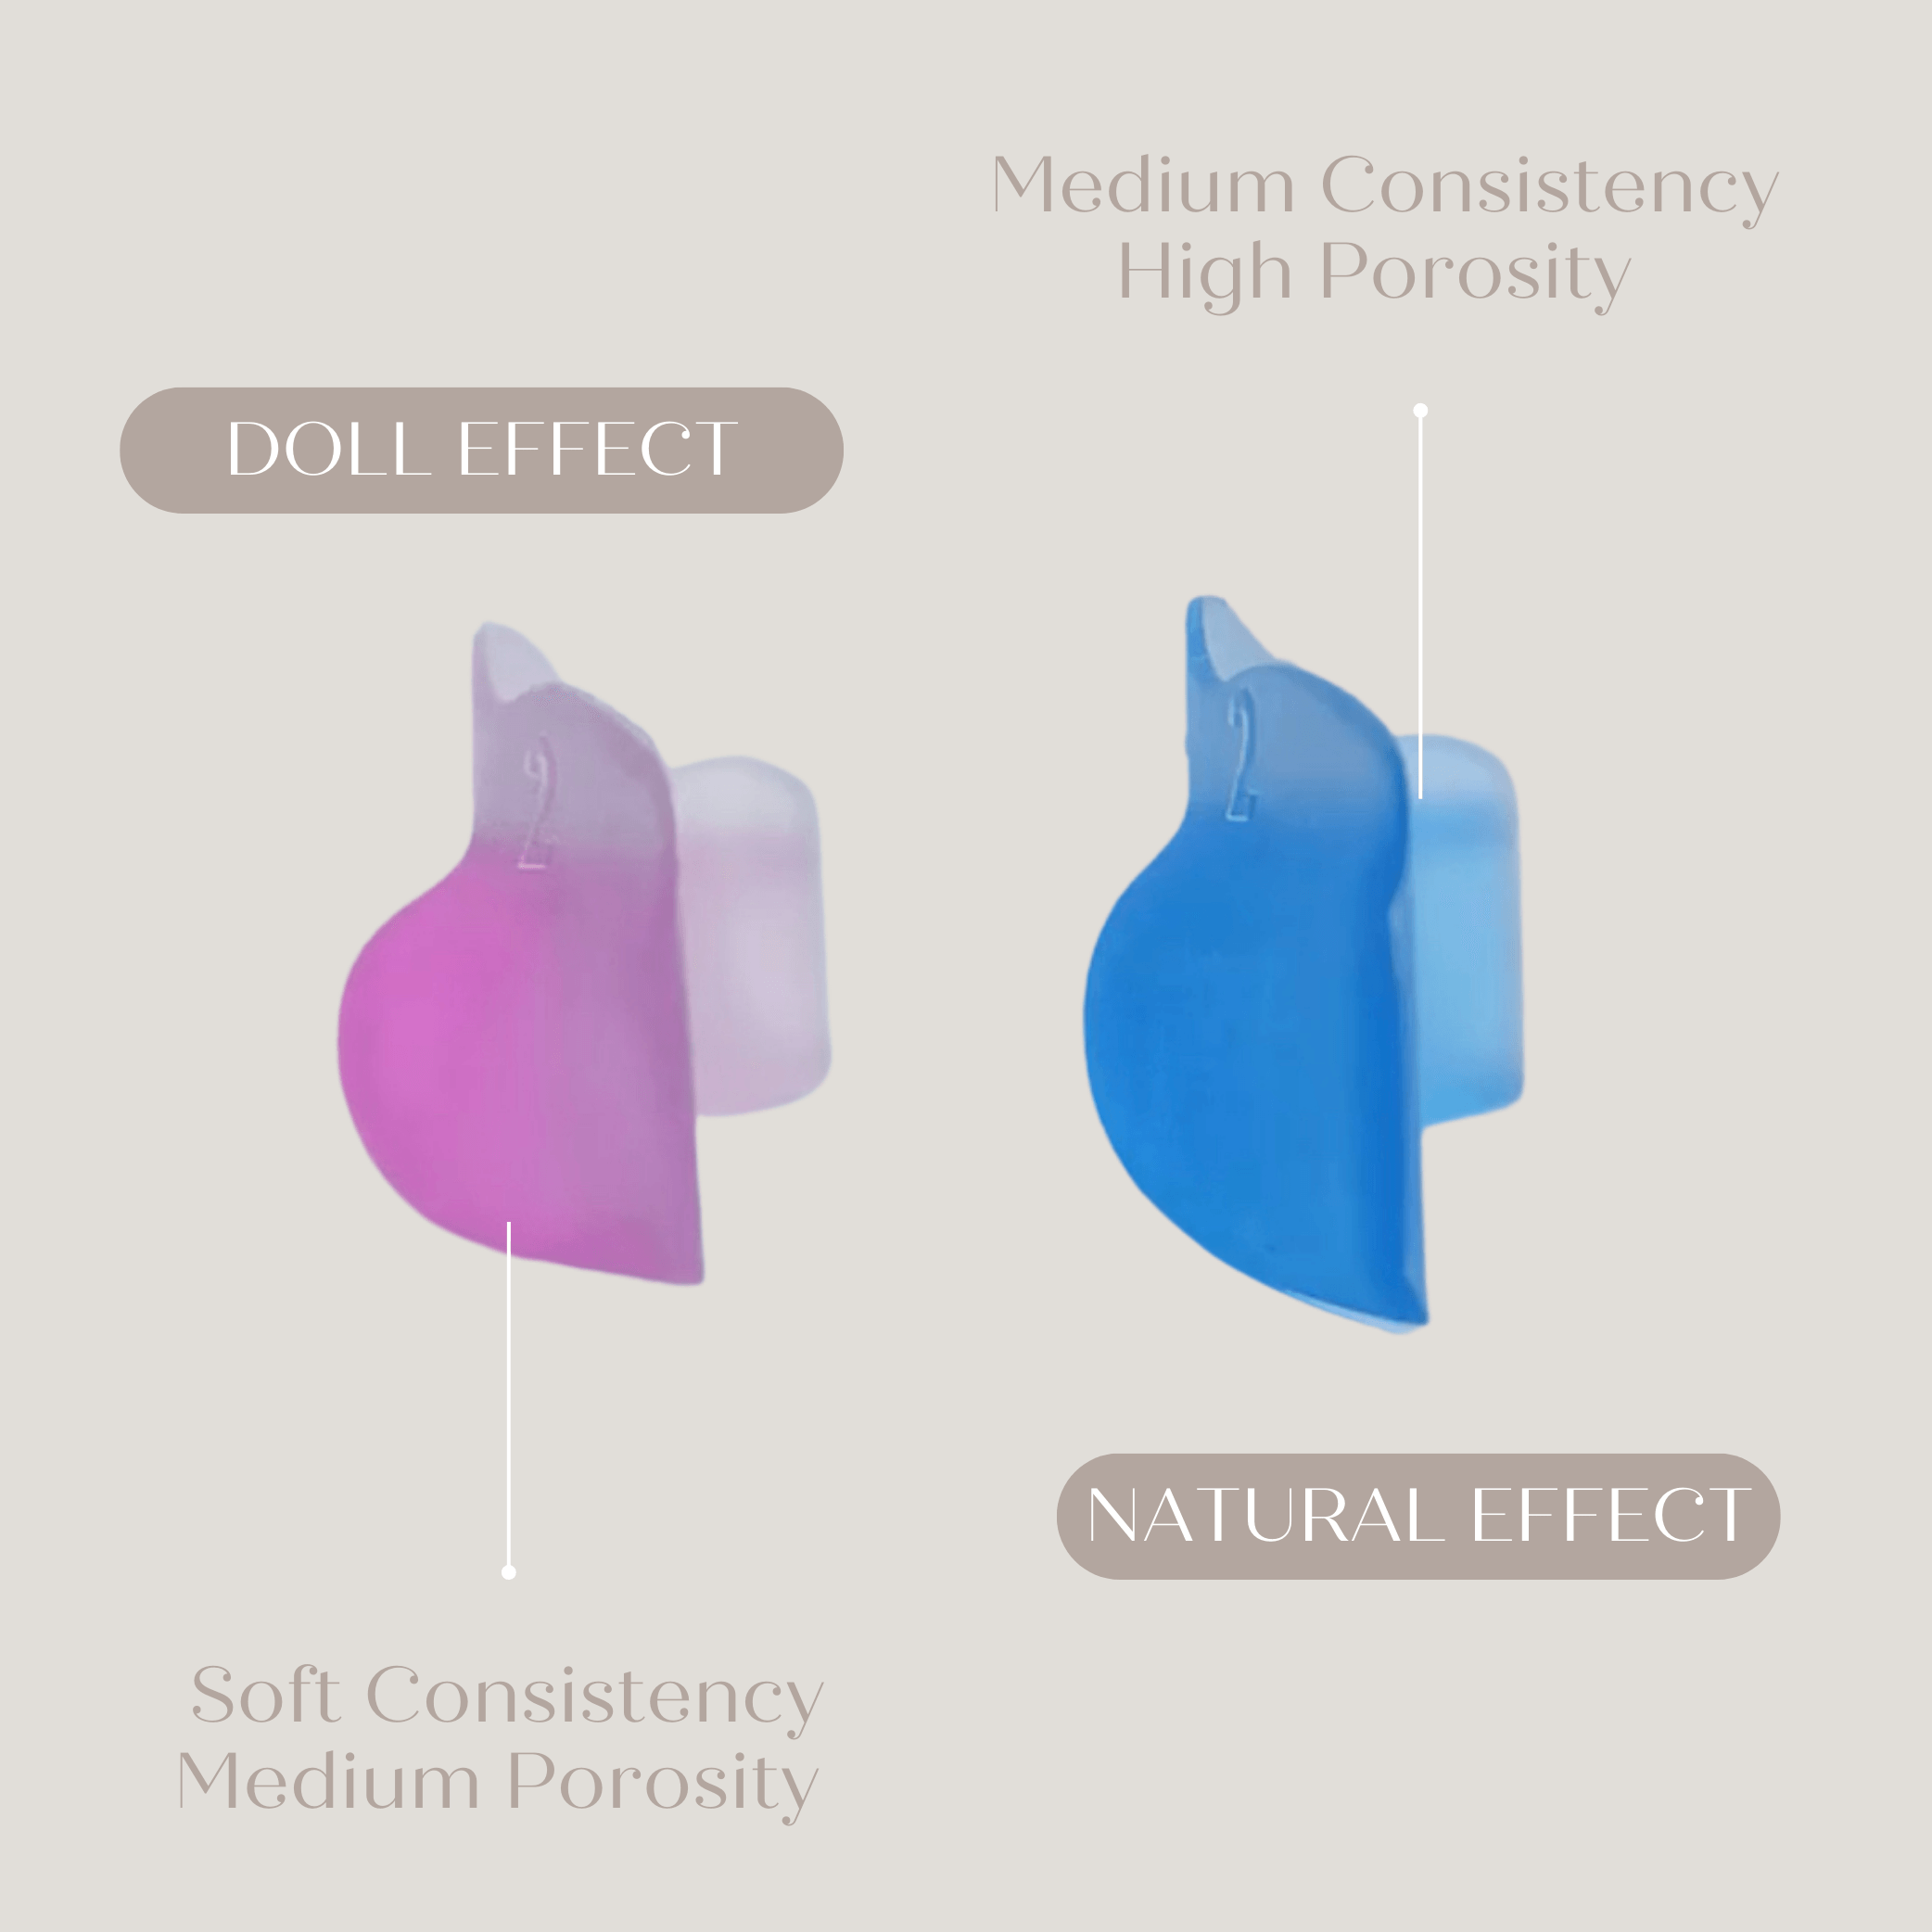 My Lamination Silicone Shields Set. Pink- Doll Effect, Soft Consistency, Medium Porosity. Blue Shields- Natural Effect. Medium Consistency, High Porosity